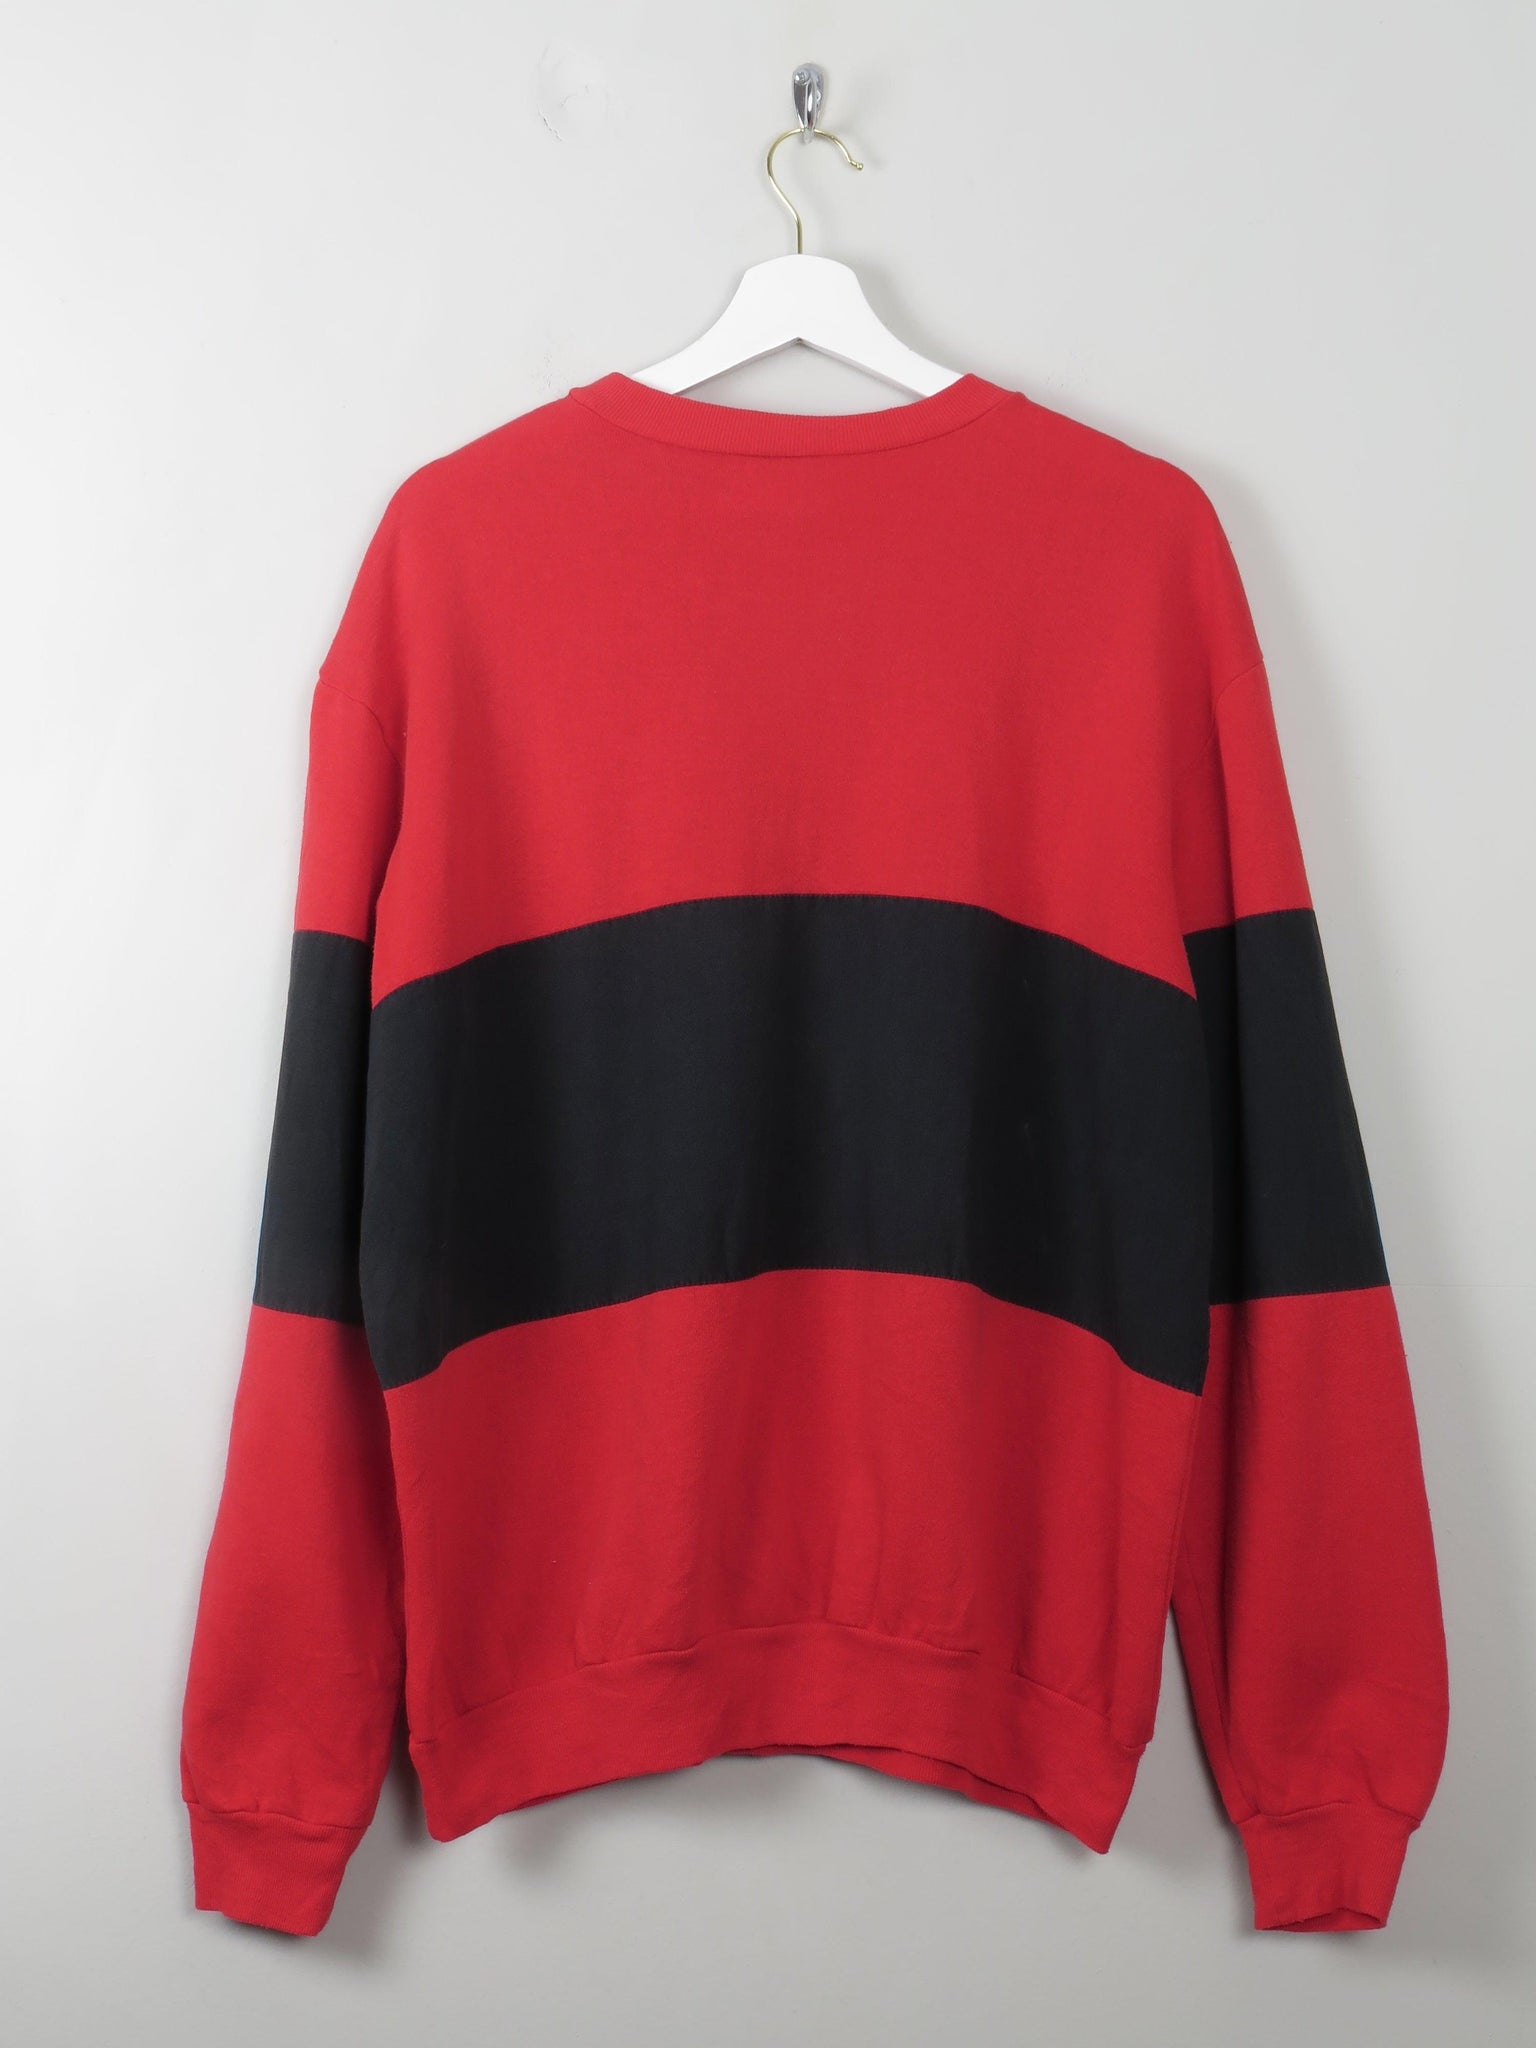 Men's Vintage Louisville Sweatshirt M/L - The Harlequin